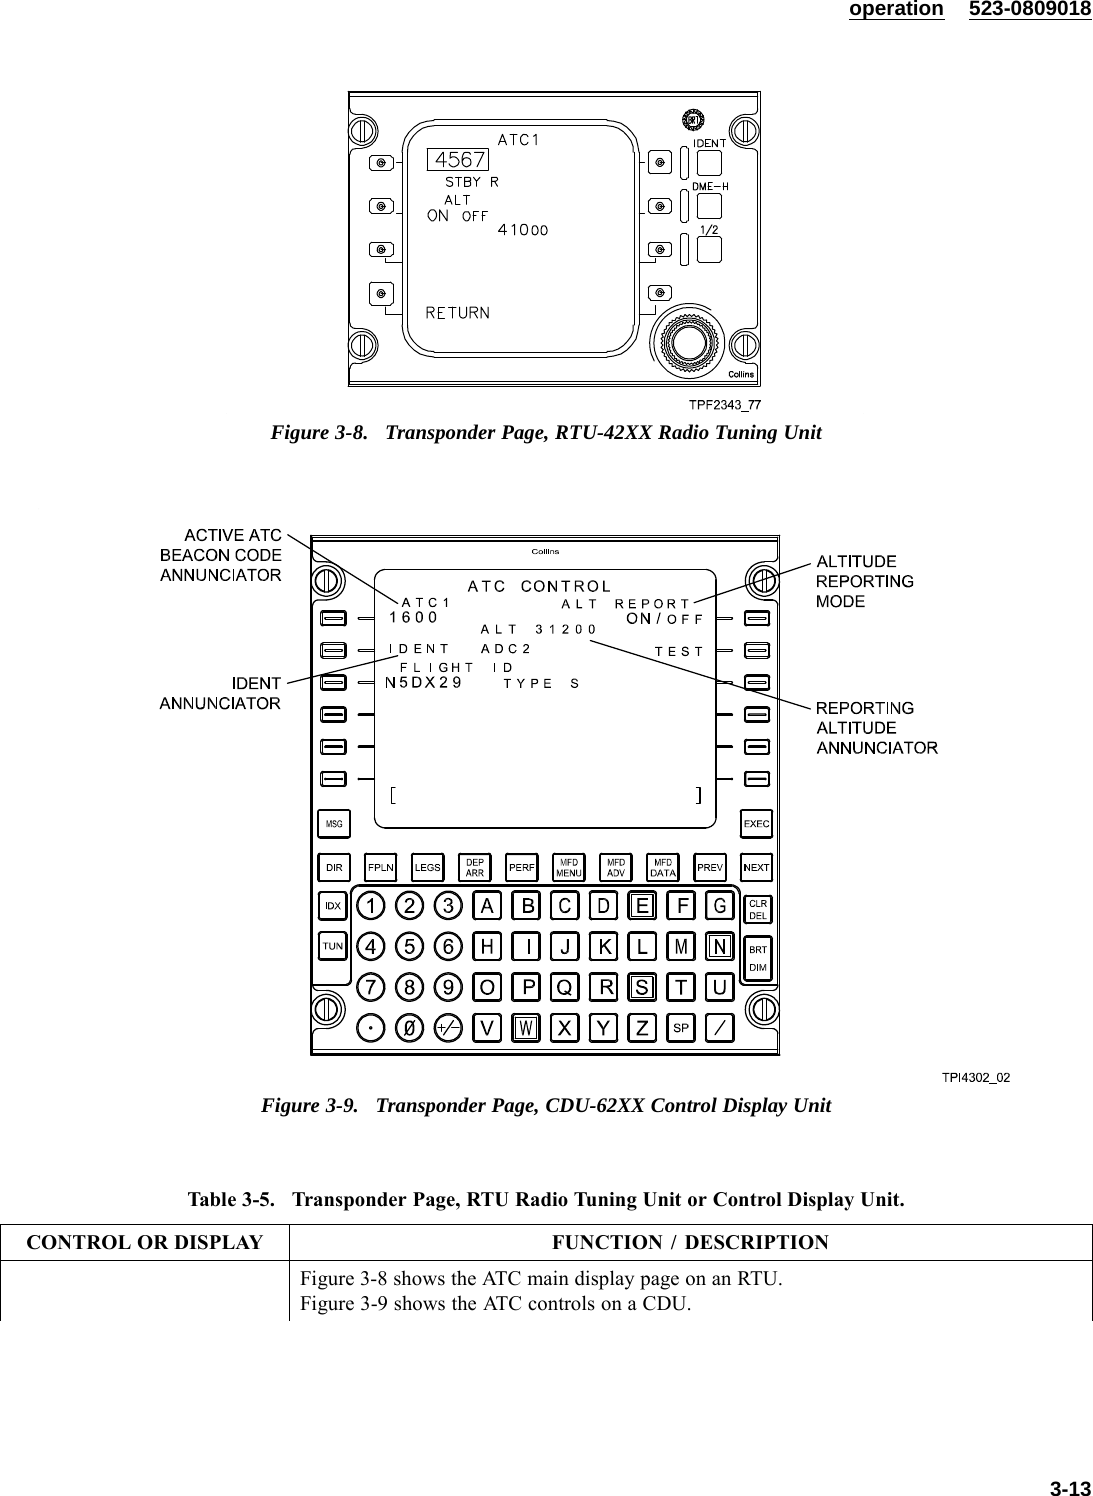 operation 523-0809018Figure 3-8. Transponder Page, RTU-42XX Radio Tuning UnitFigure 3-9. Transponder Page, CDU-62XX Control Display UnitTable 3-5. Transponder Page, RTU Radio Tuning Unit or Control Display Unit.CONTROL OR DISPLAY FUNCTION / DESCRIPTIONFigure 3-8 shows the ATC main display page on an RTU.Figure 3-9 shows the ATC controls on a CDU.3-13